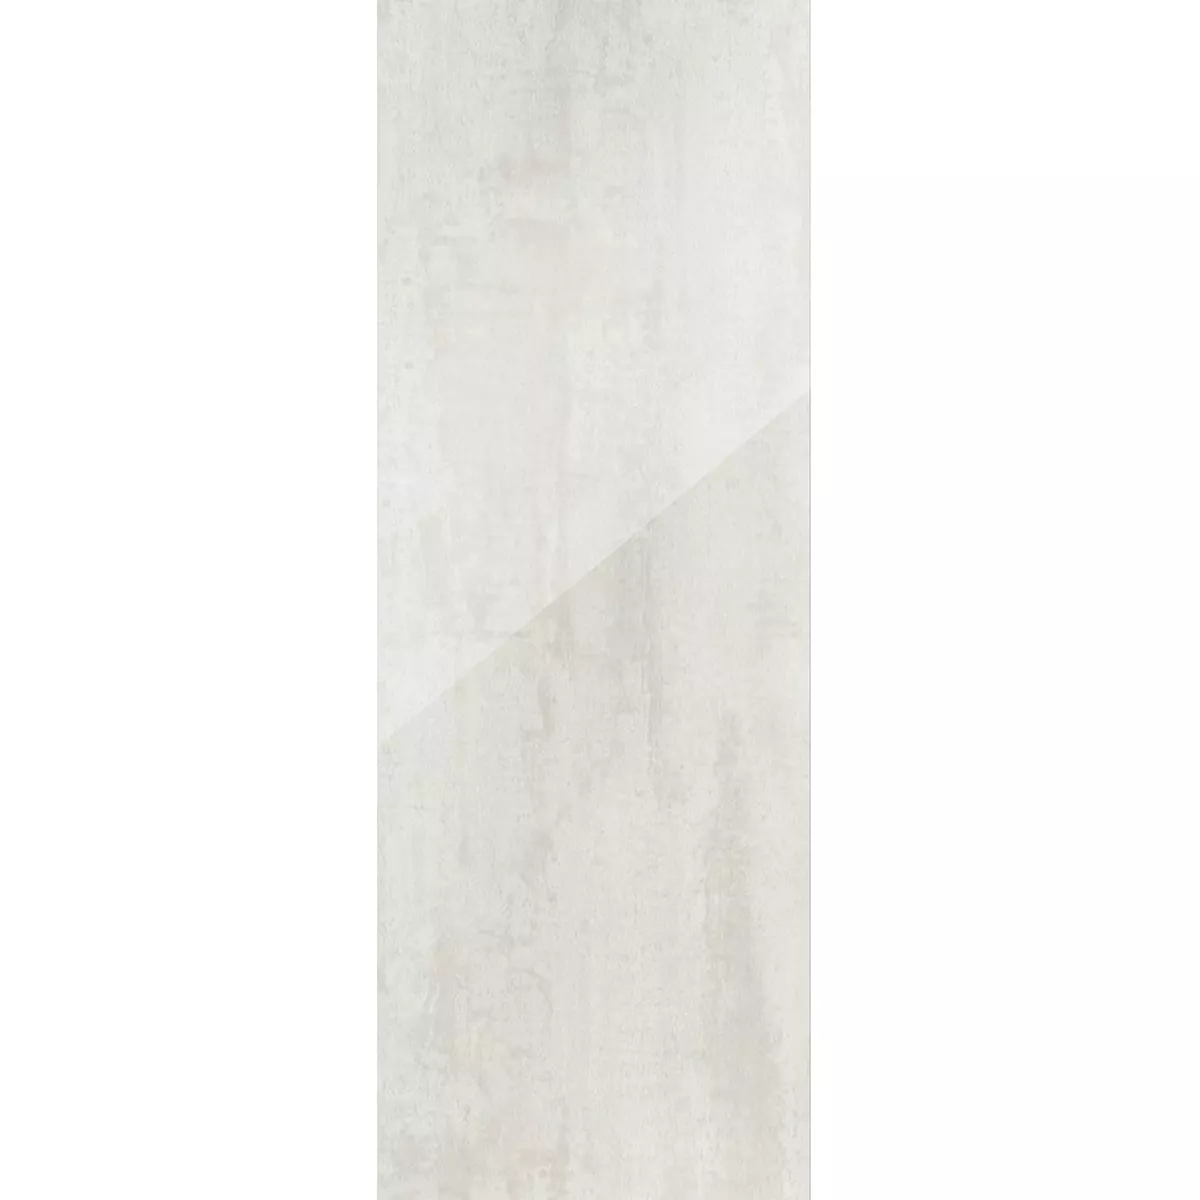 Vloertegels Herion Metaal Lappato Blanco 45x90cm